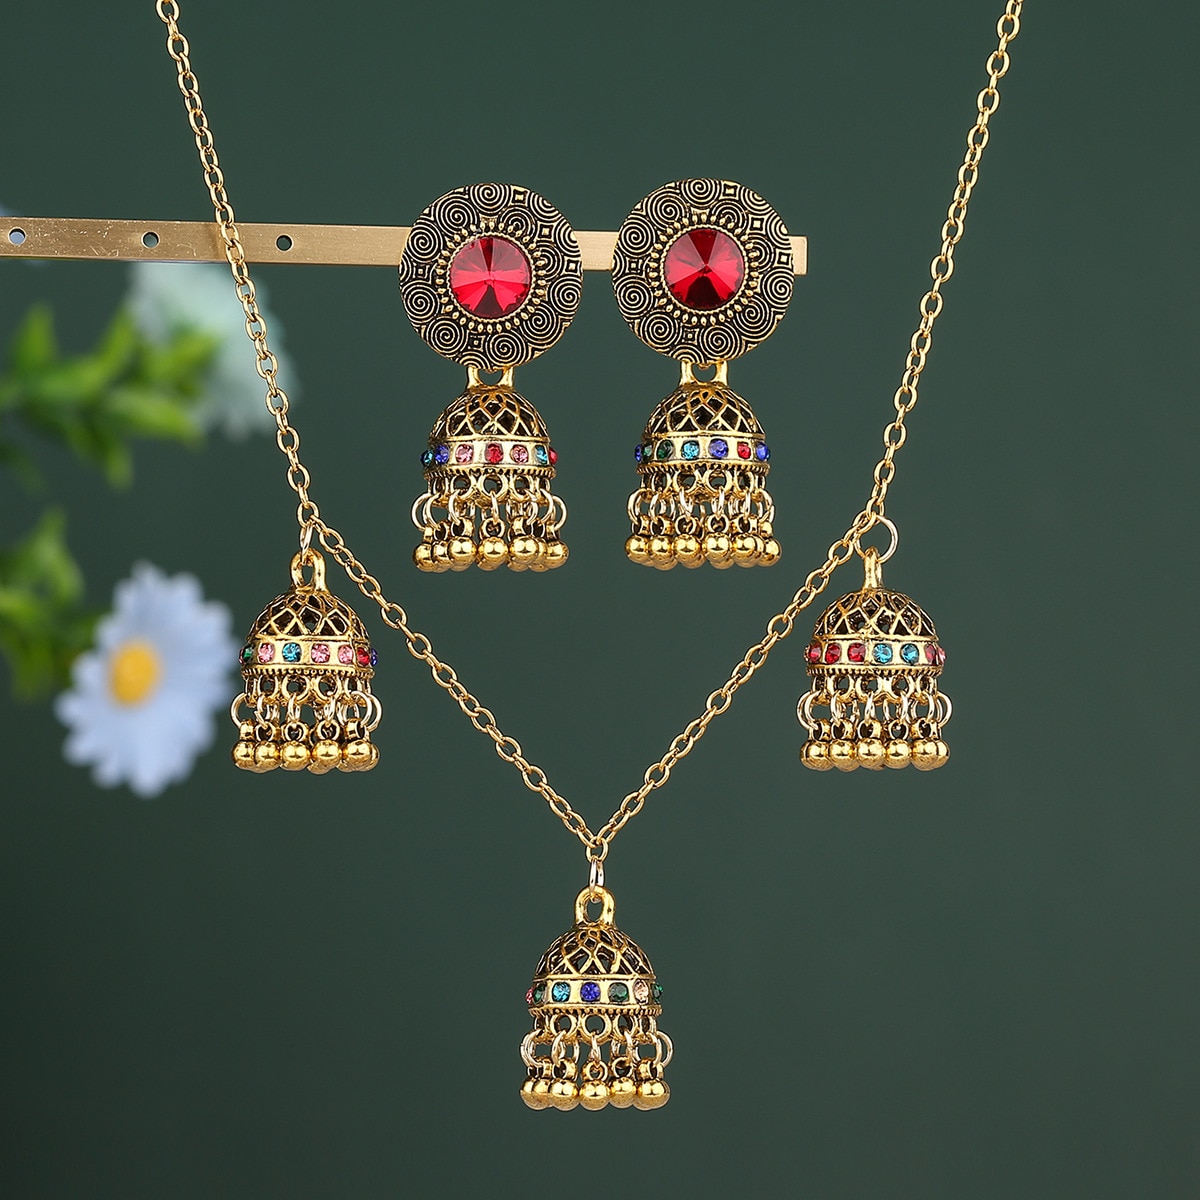 New-Women39s-Indian-Jewelry-Set-EarringNecklace-Wedding-Jewelry-Hangers-Luxury-Retro-Red-CZ-Geometry-1005004536295375-2